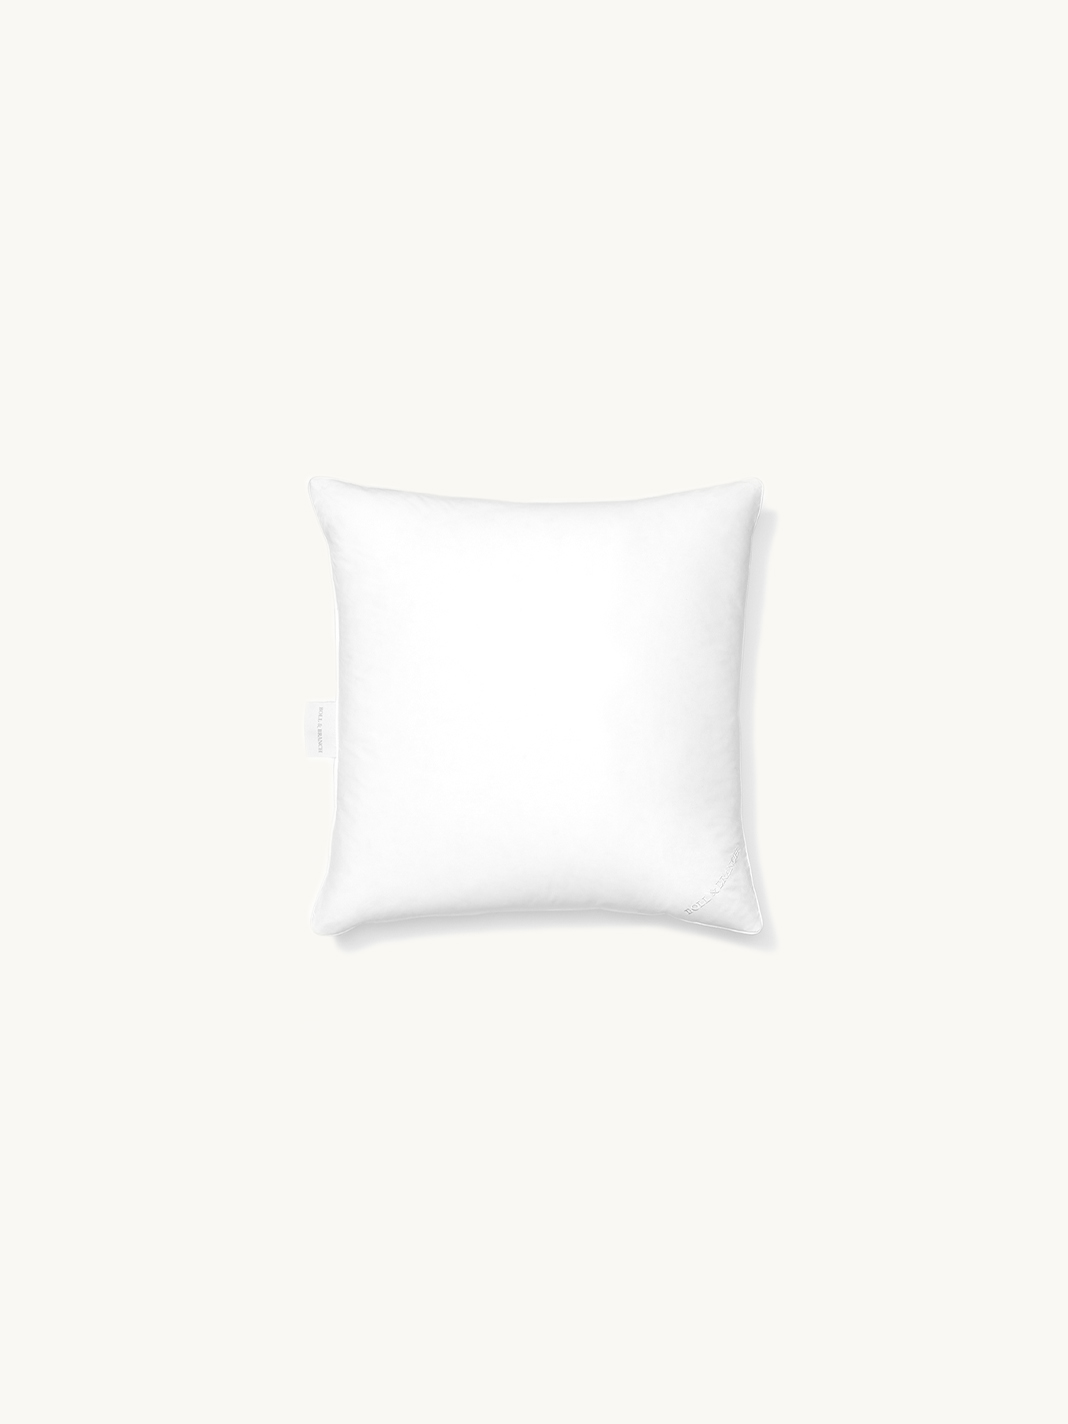 undefined Down Alternative Euro Pillow Insert - Slide 1